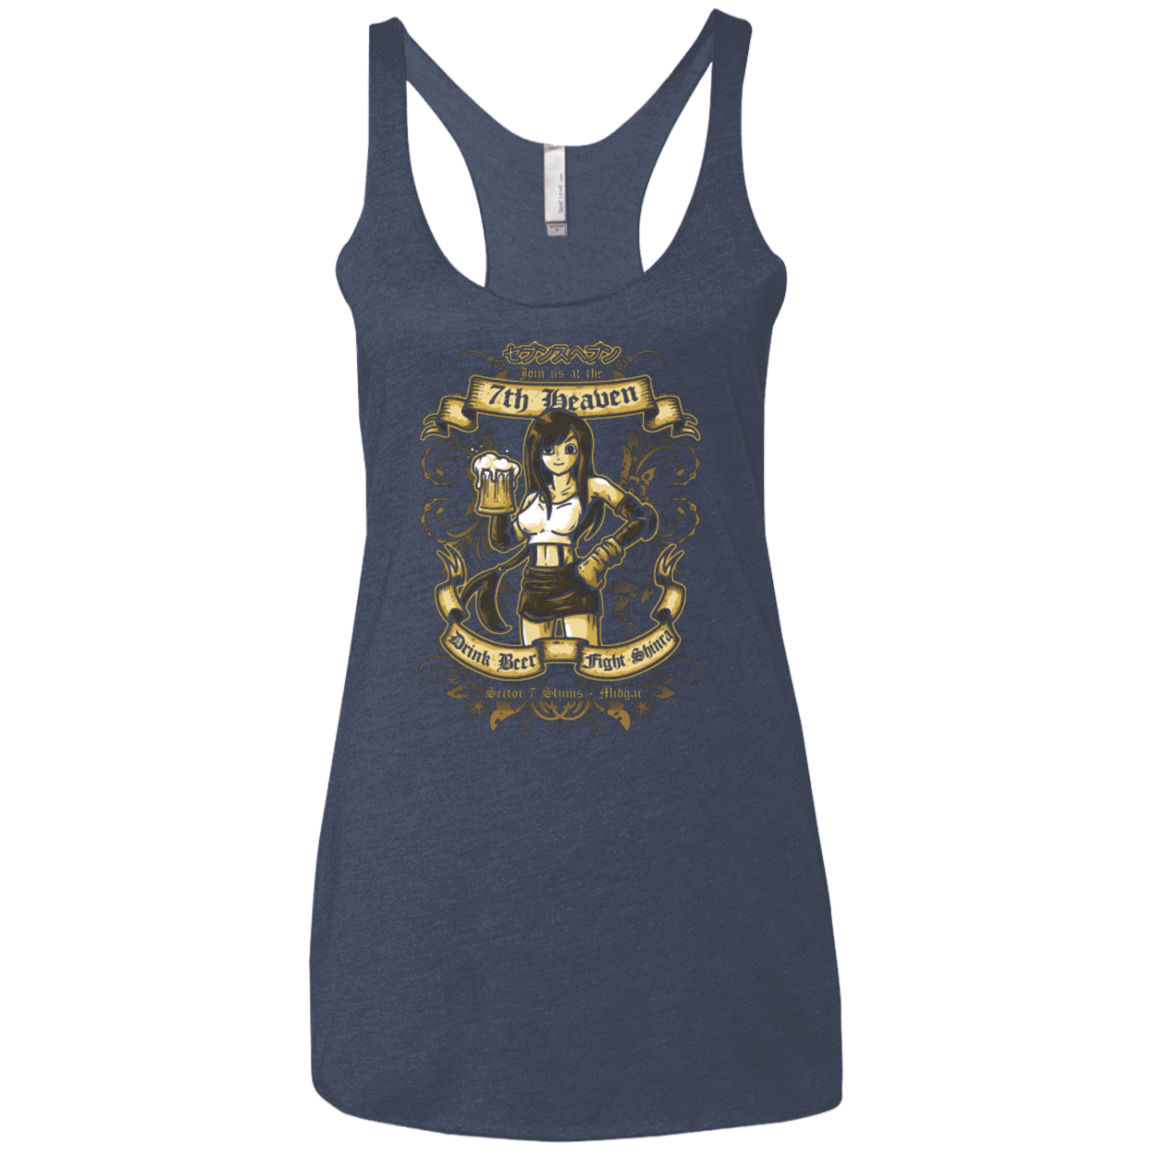 T-Shirts Vintage Navy / X-Small 7TH HEAVEN Women's Triblend Racerback Tank